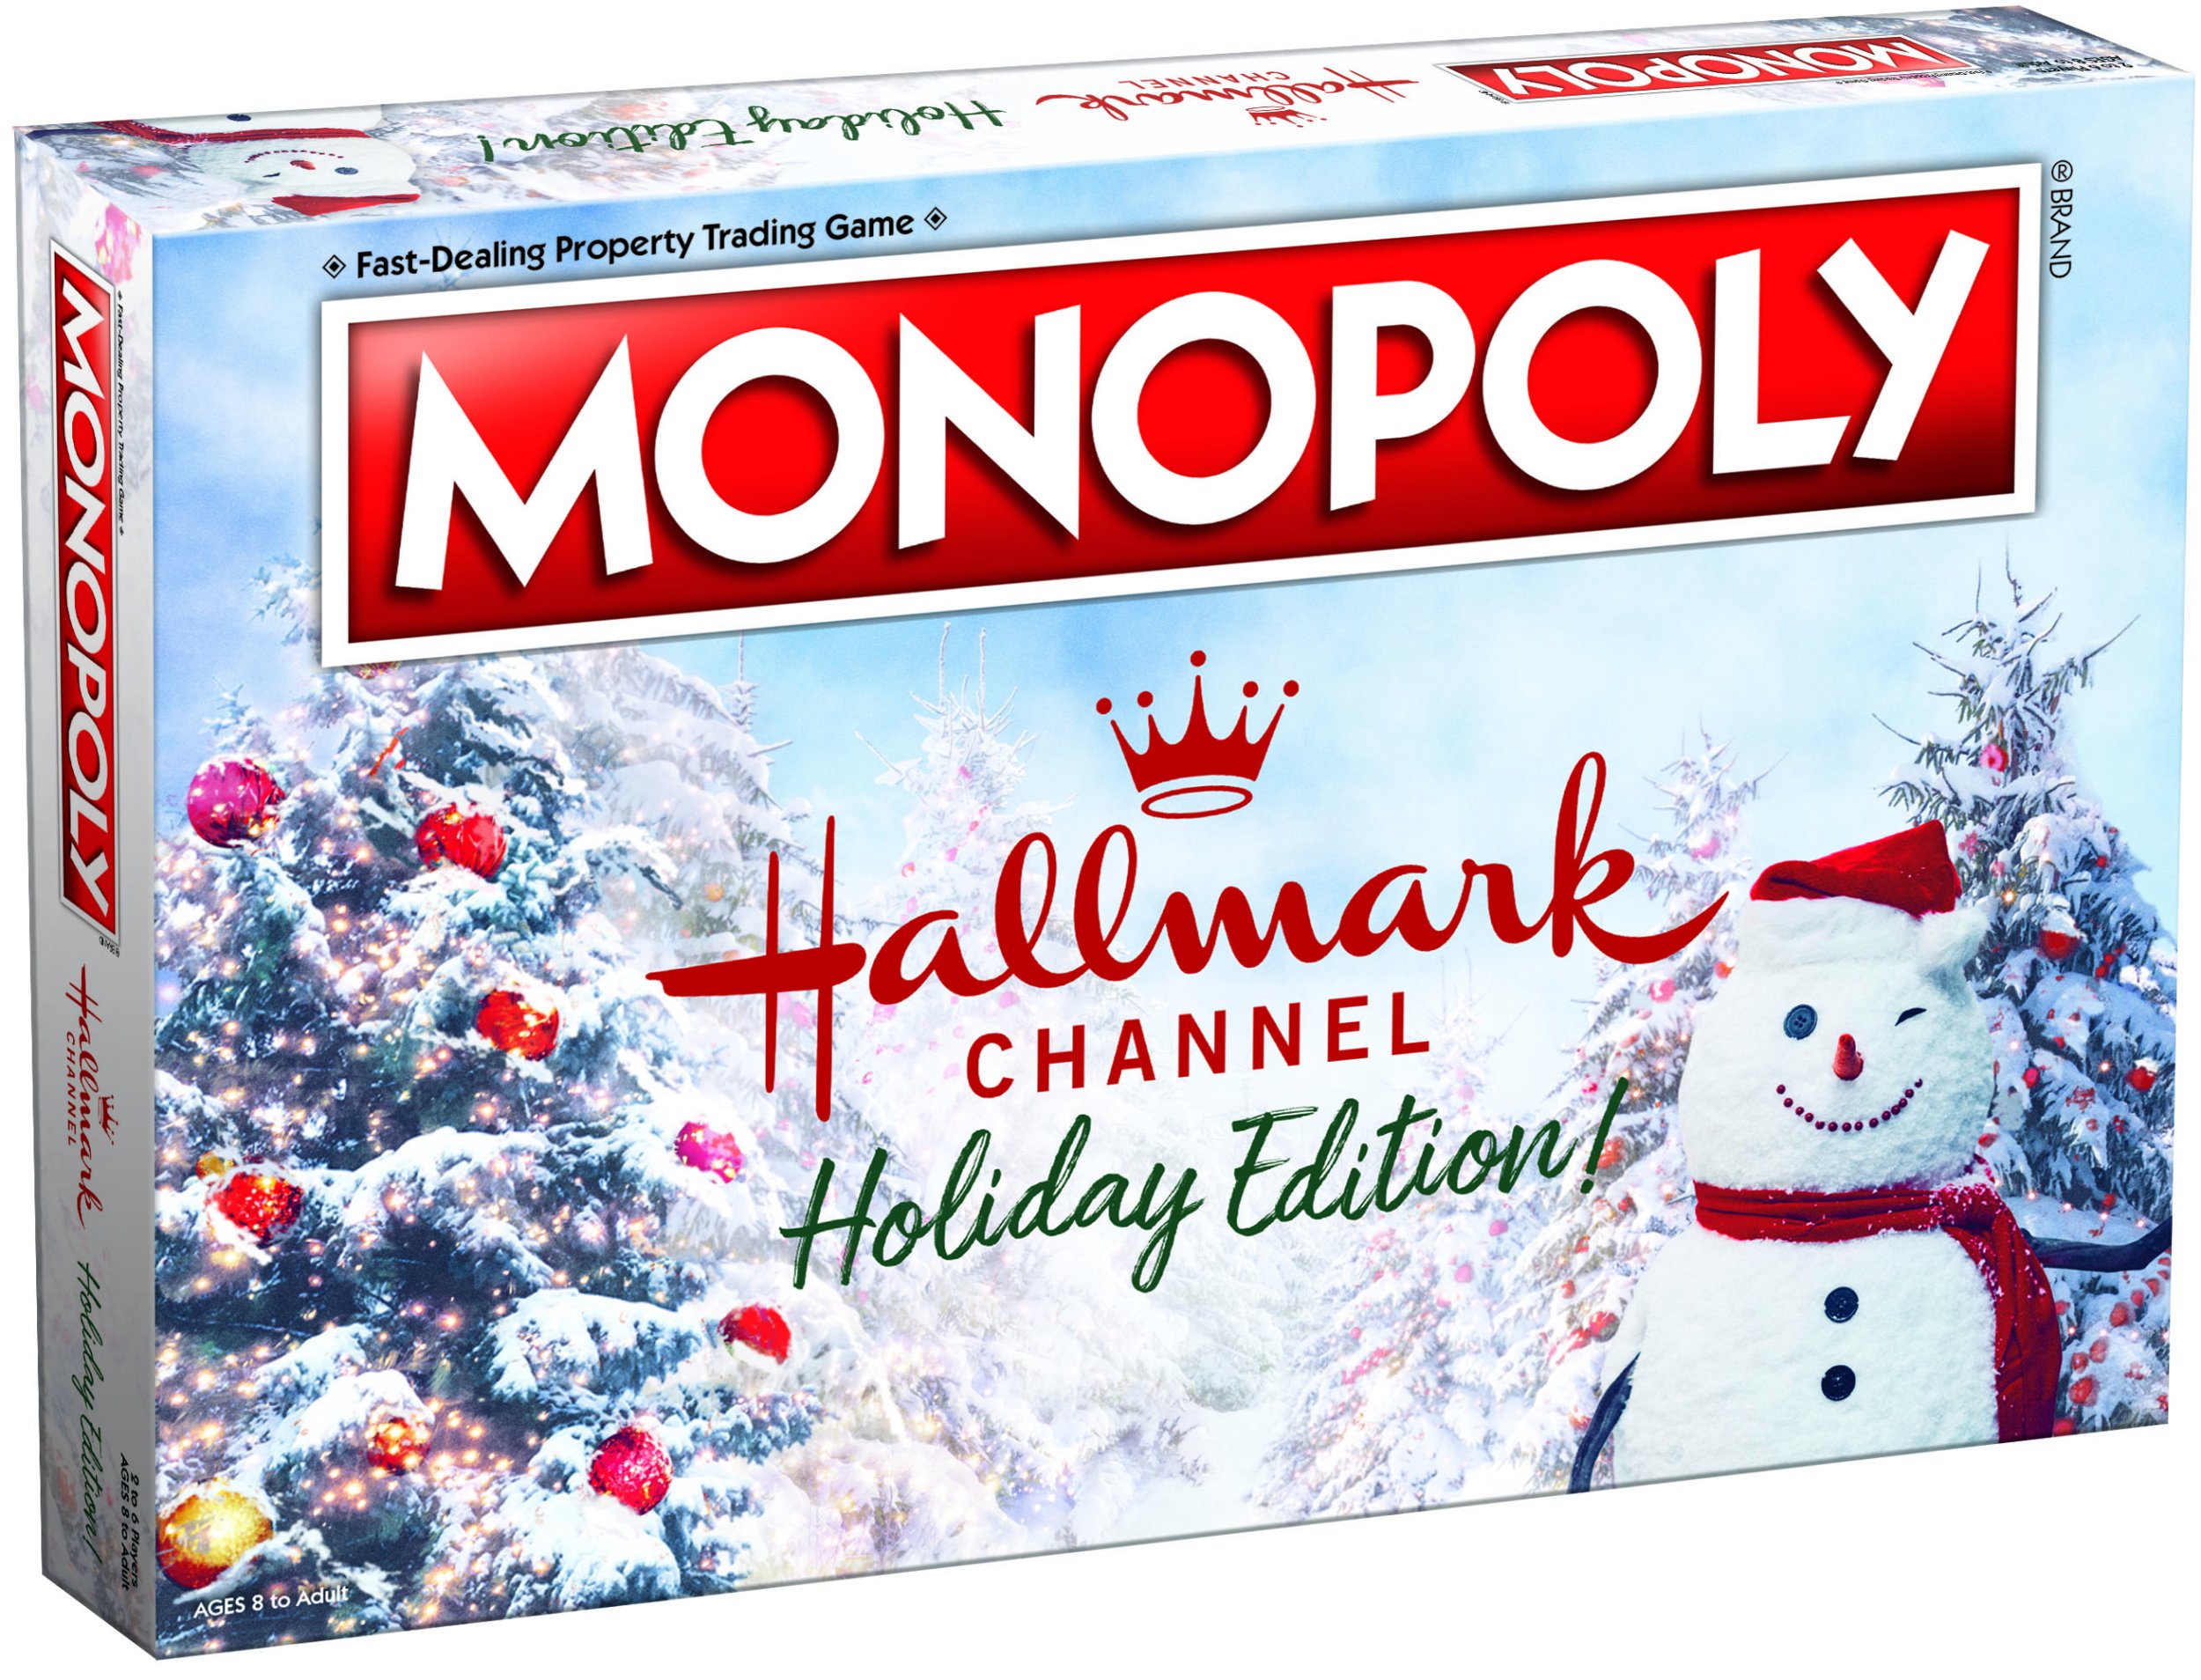 Hallmark Channel ‘Countdown To Christmas’ Kicks Off With New Holiday